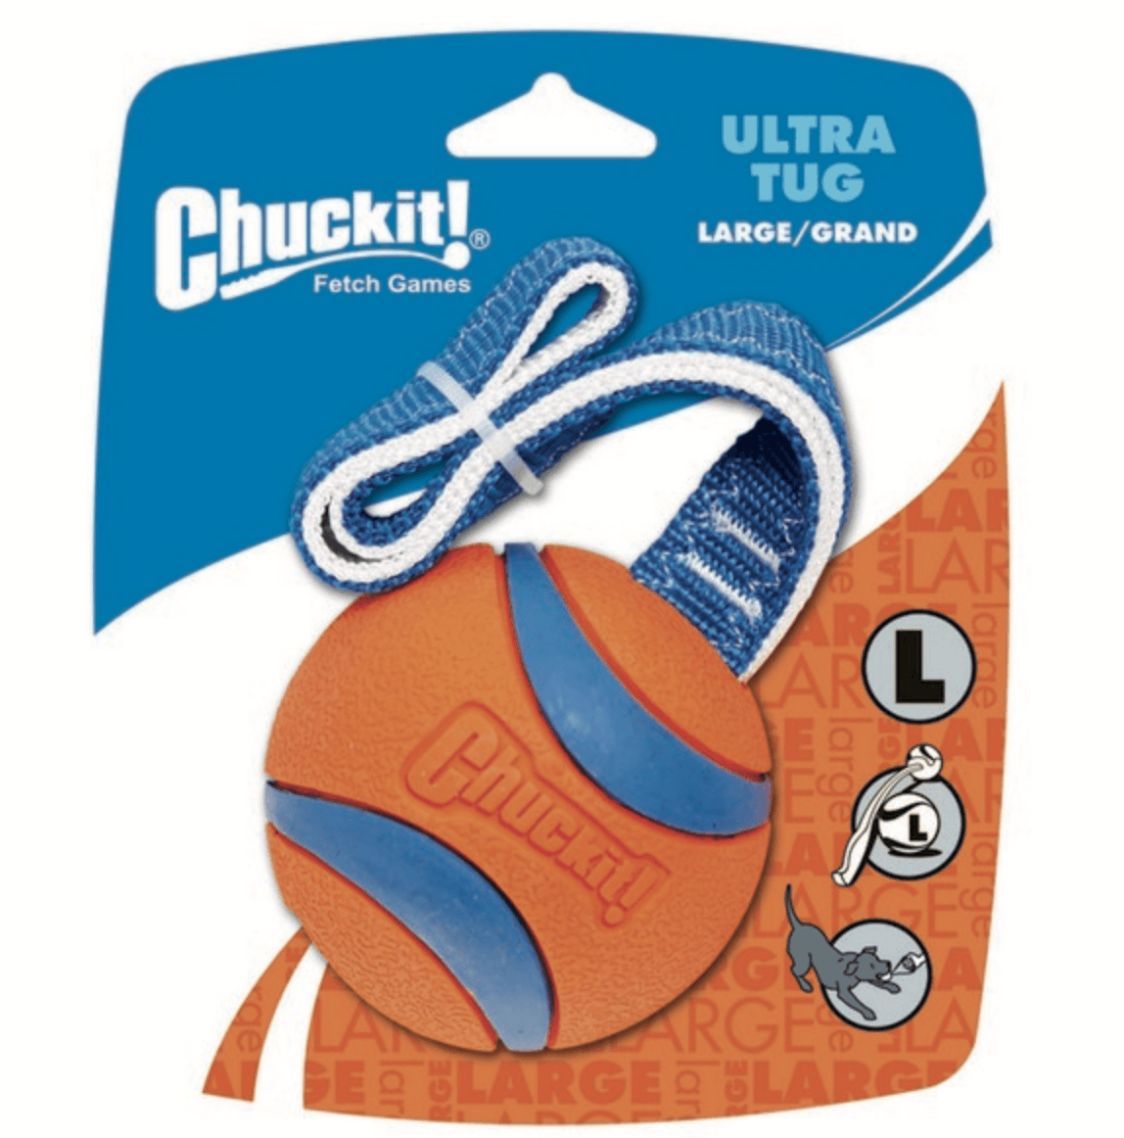 Chuckit! Ultra Tug 2 Sizes Available